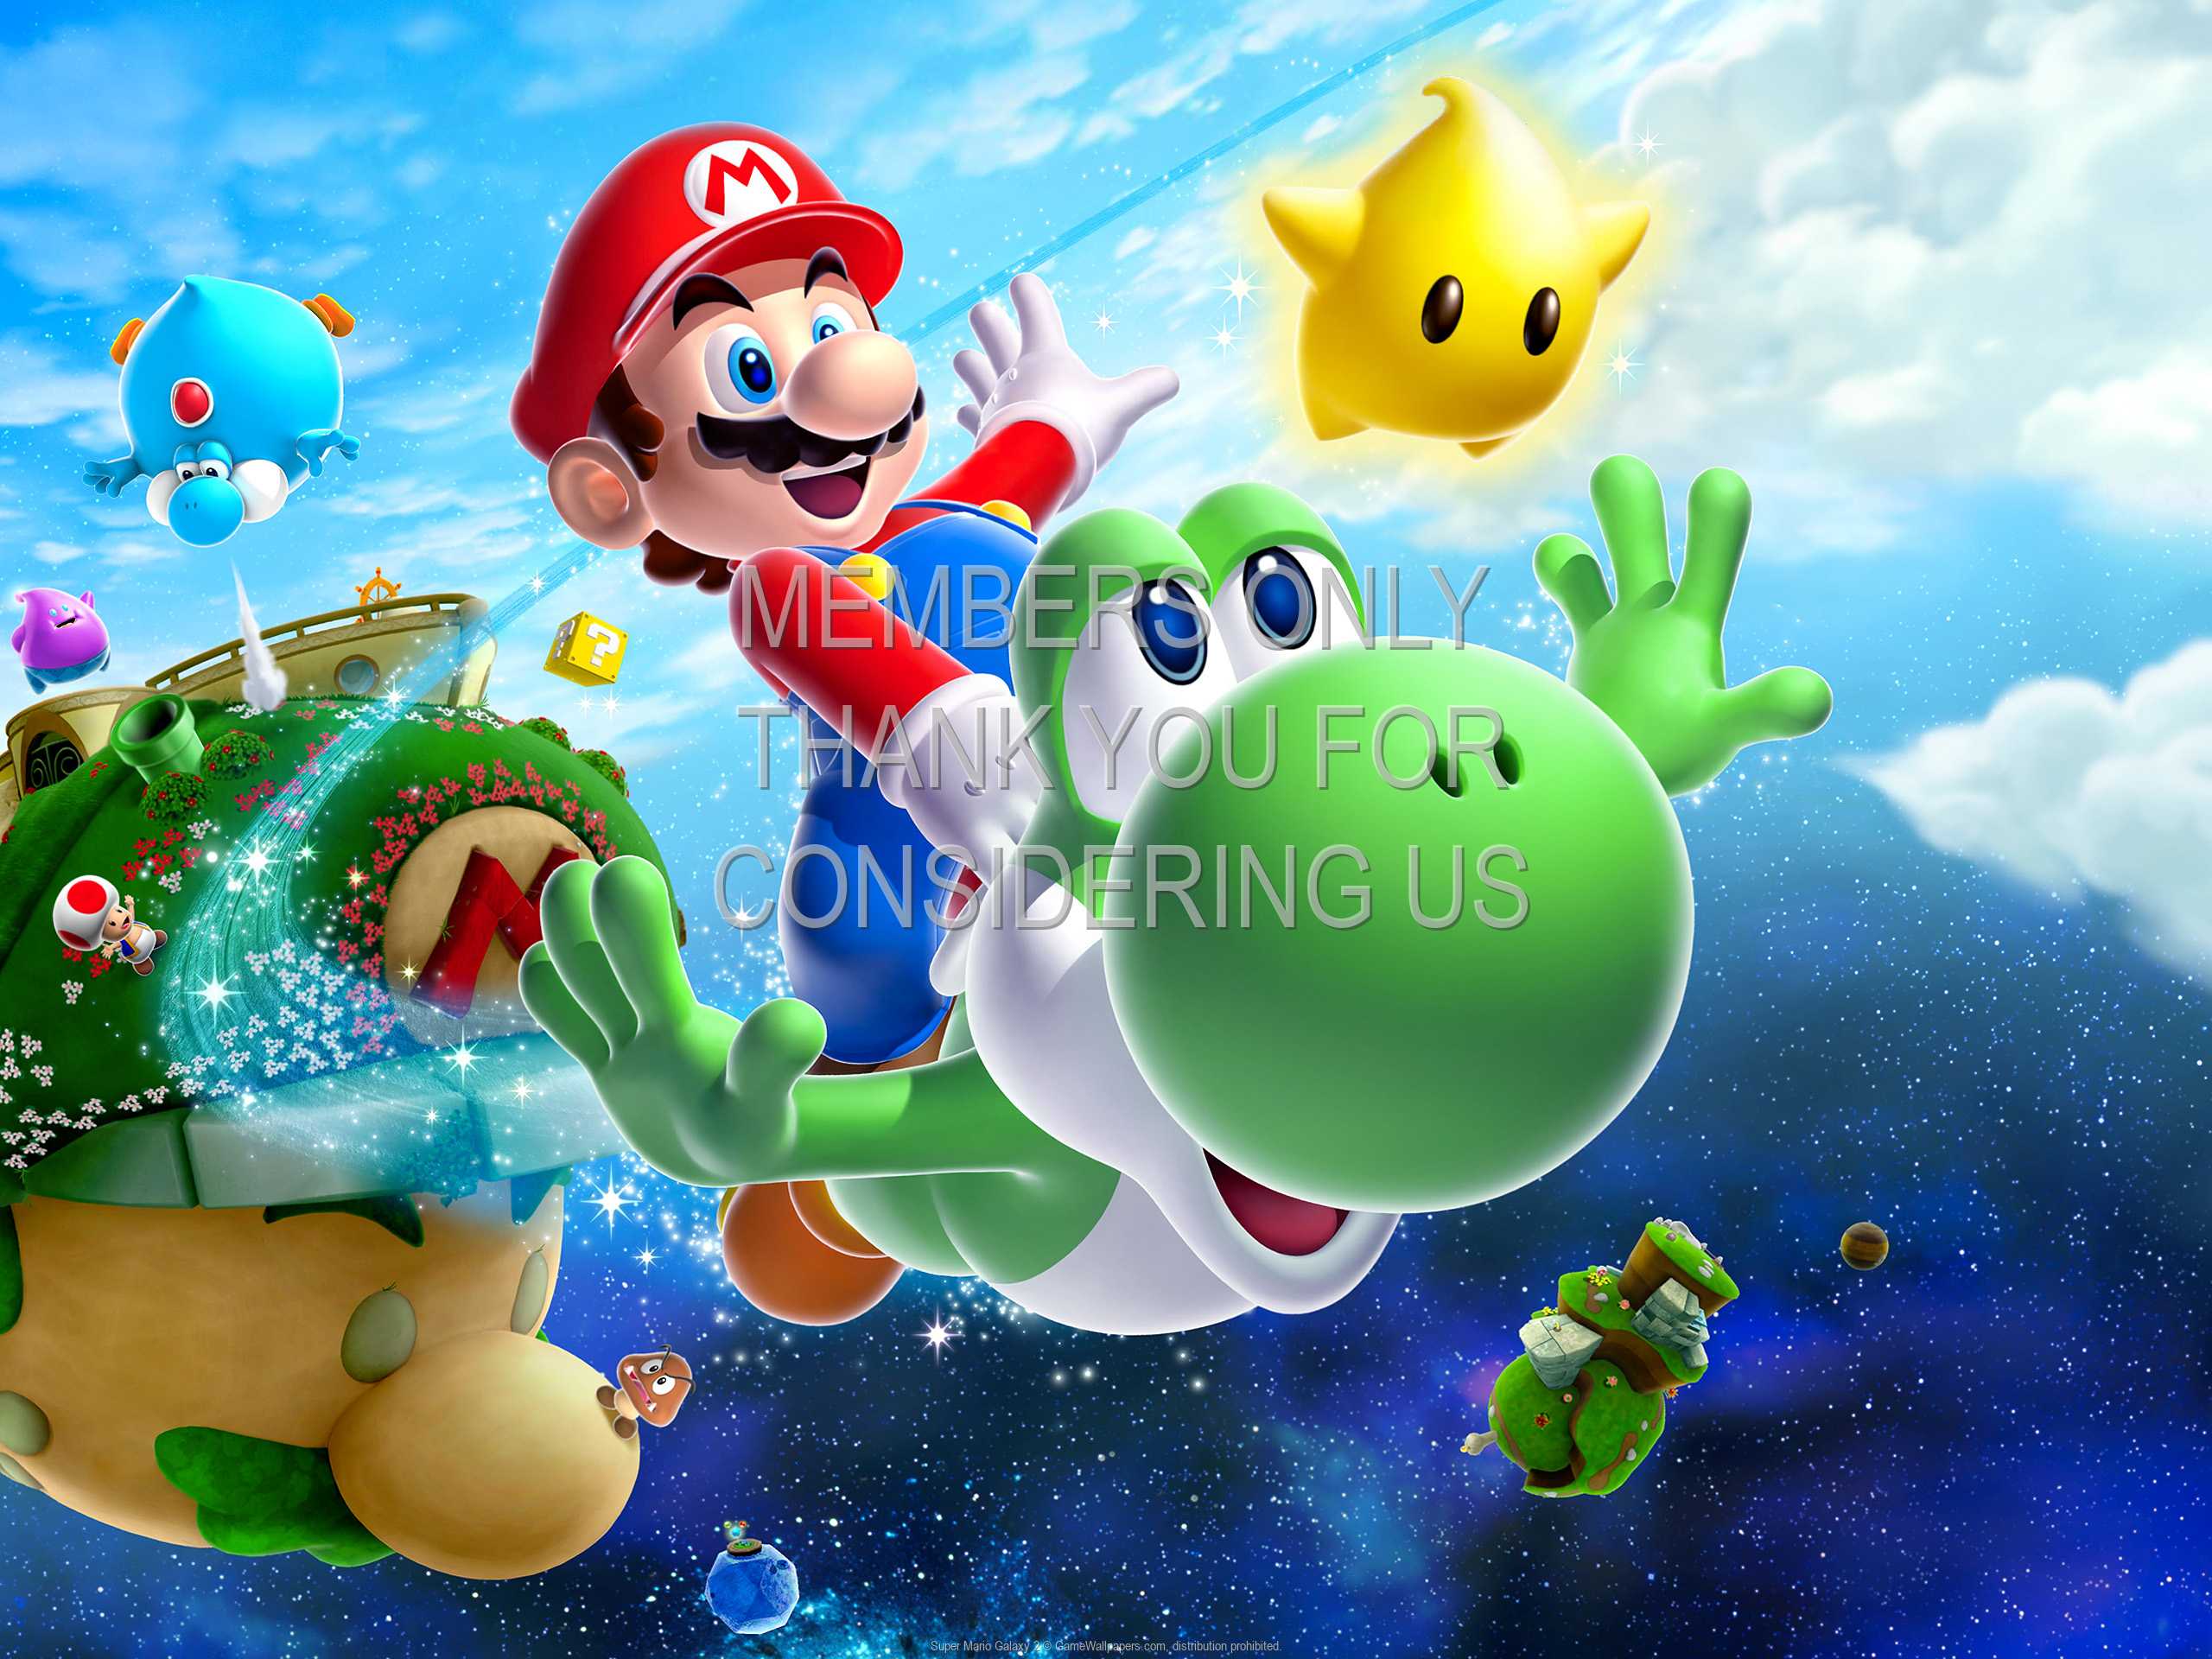 Super Mario Galaxy 2 1080p%20Horizontal Mobile wallpaper or background 01